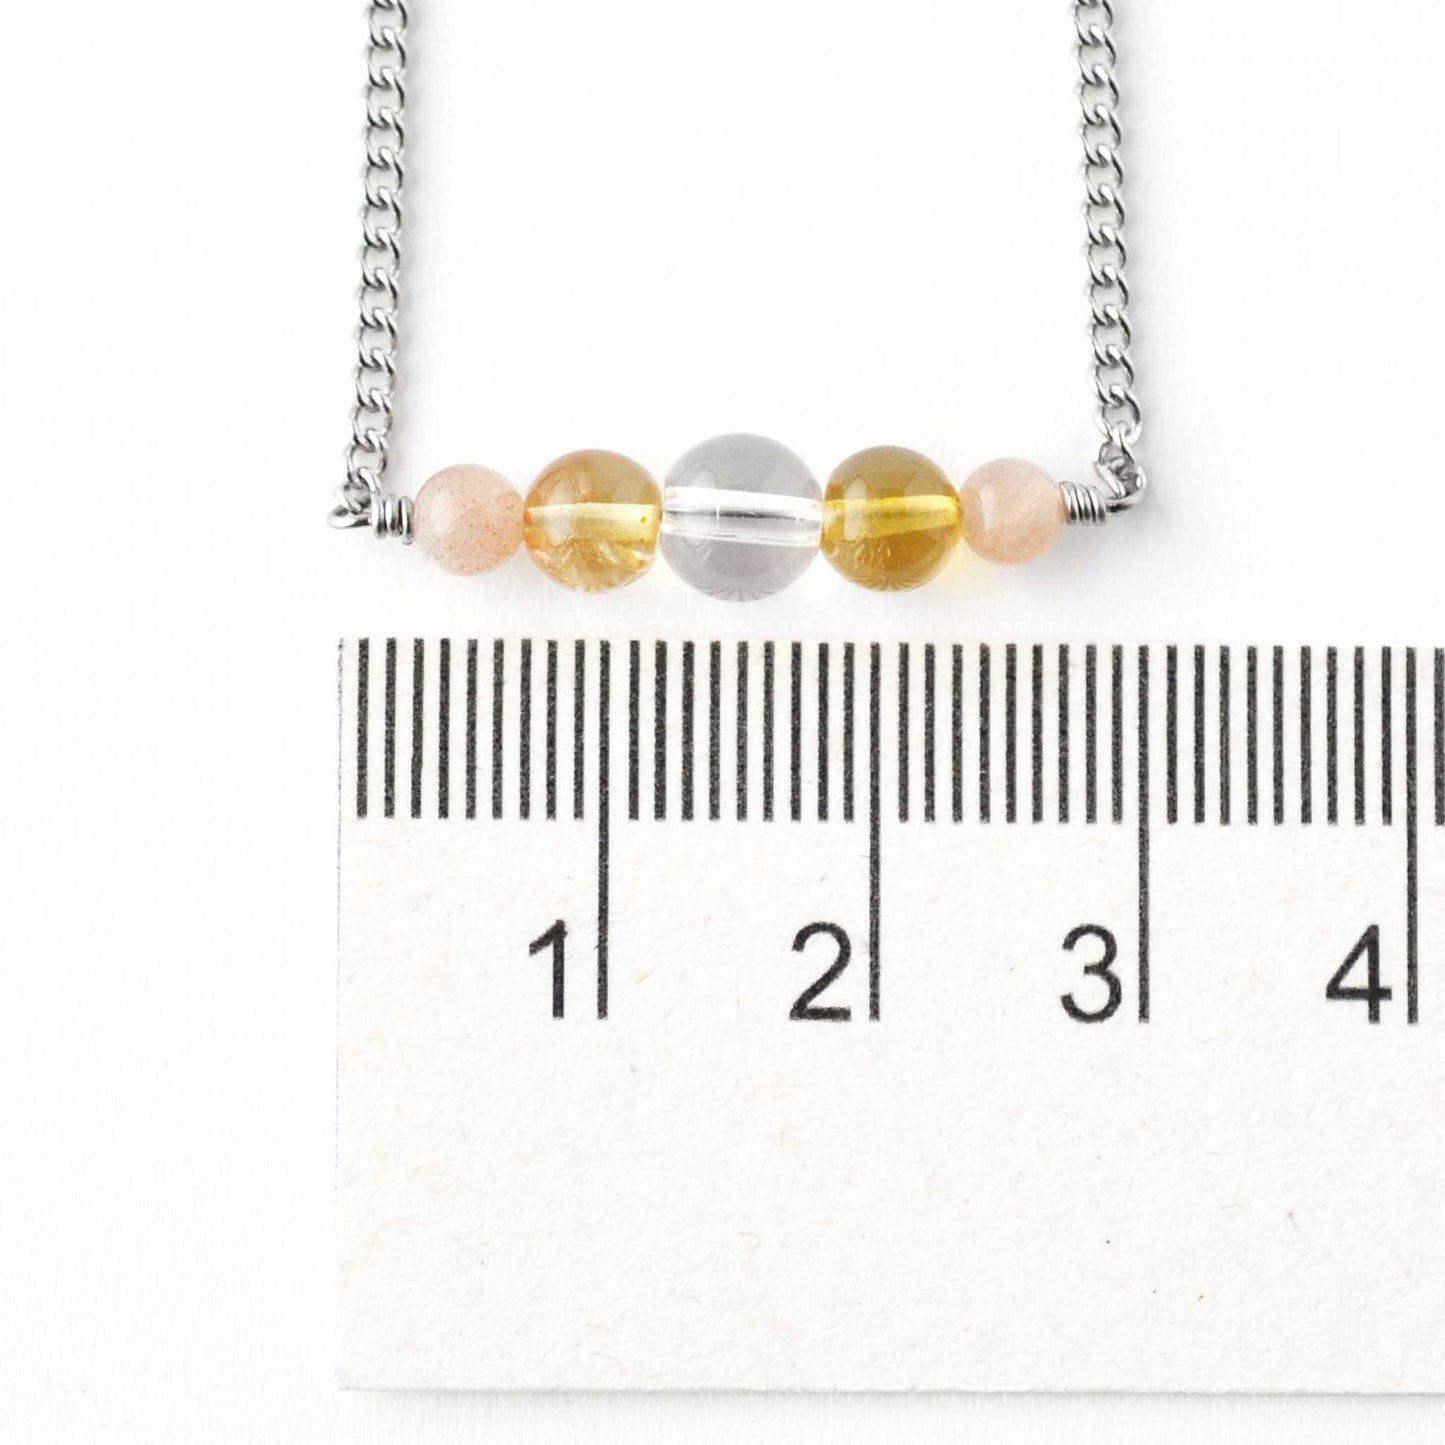 Yellow gemstone bar necklace next to ruler